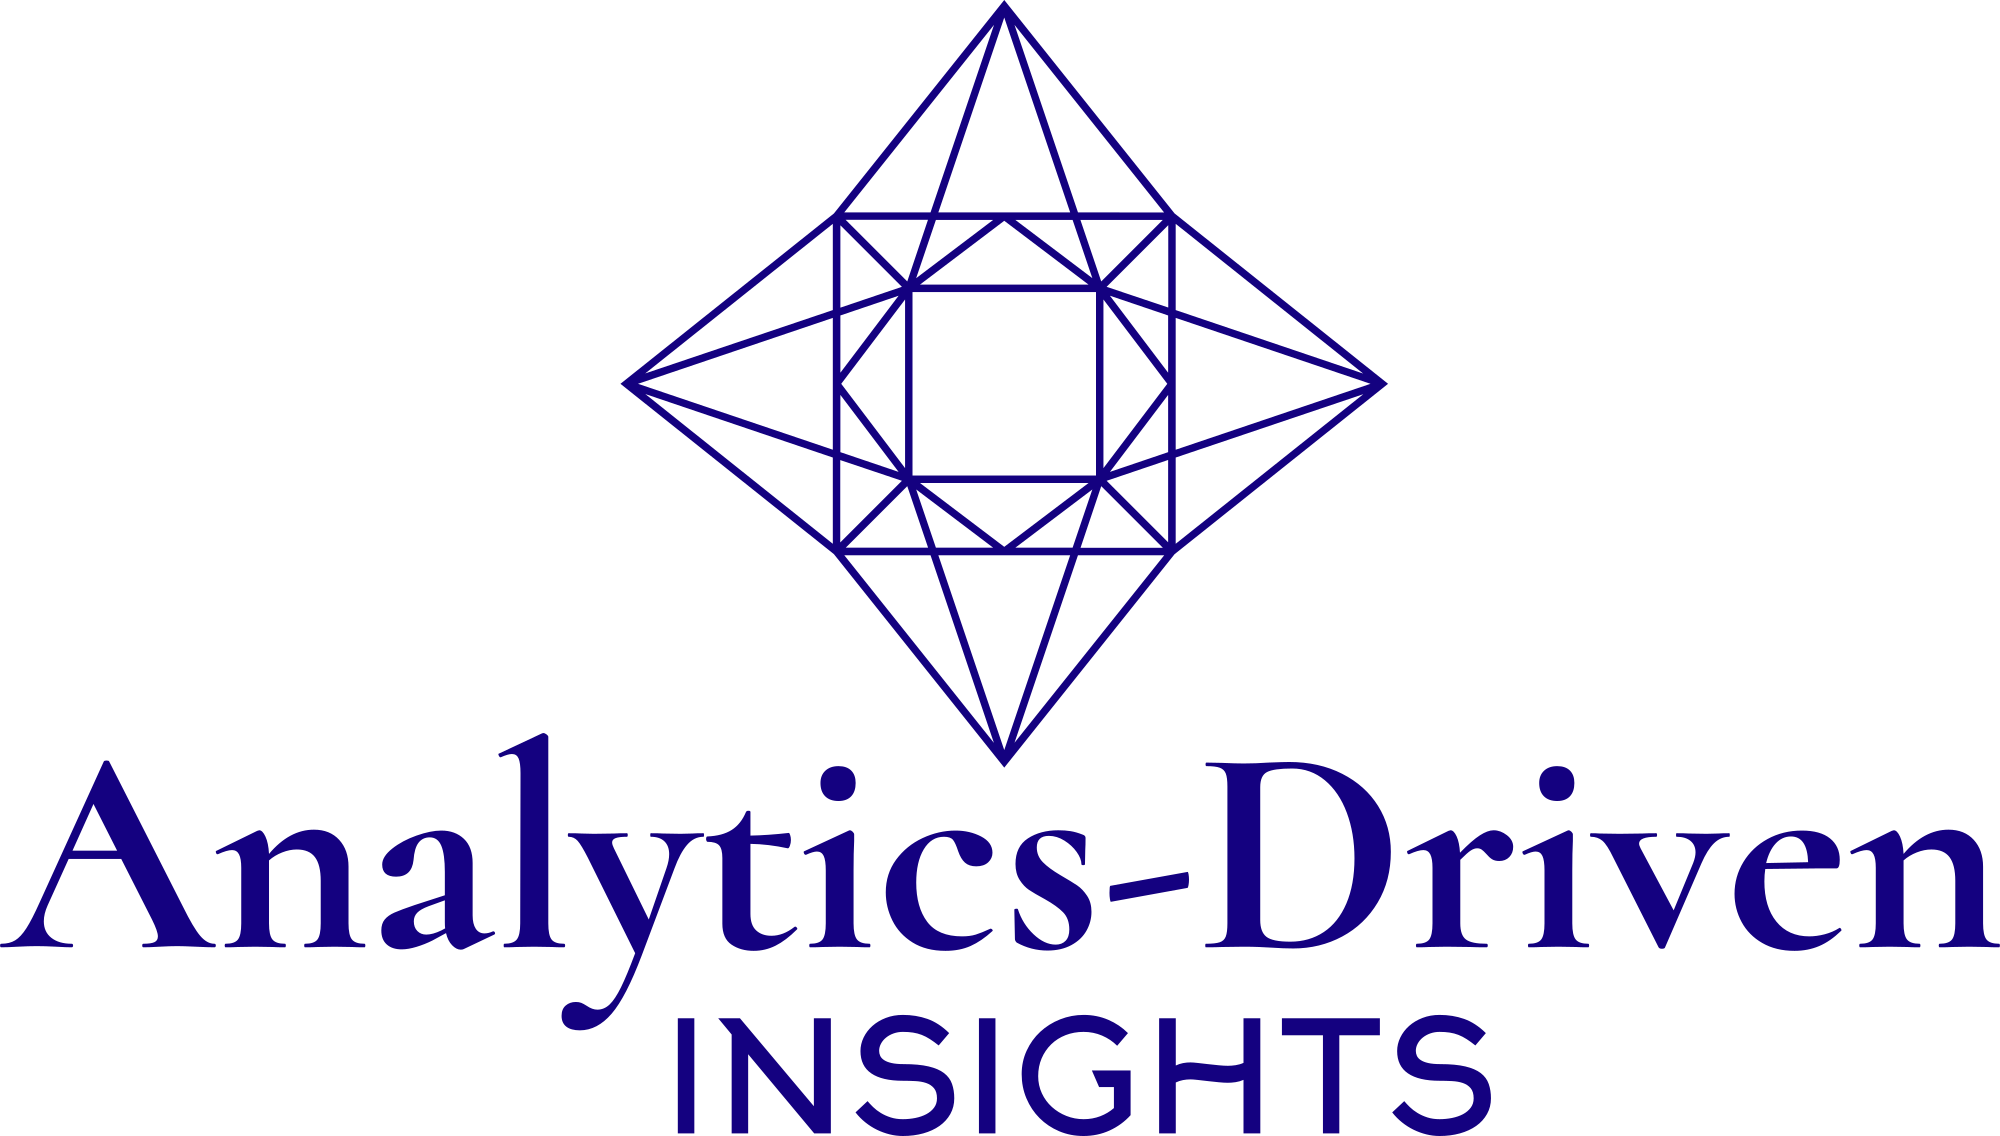 Analytics-Driven Insights